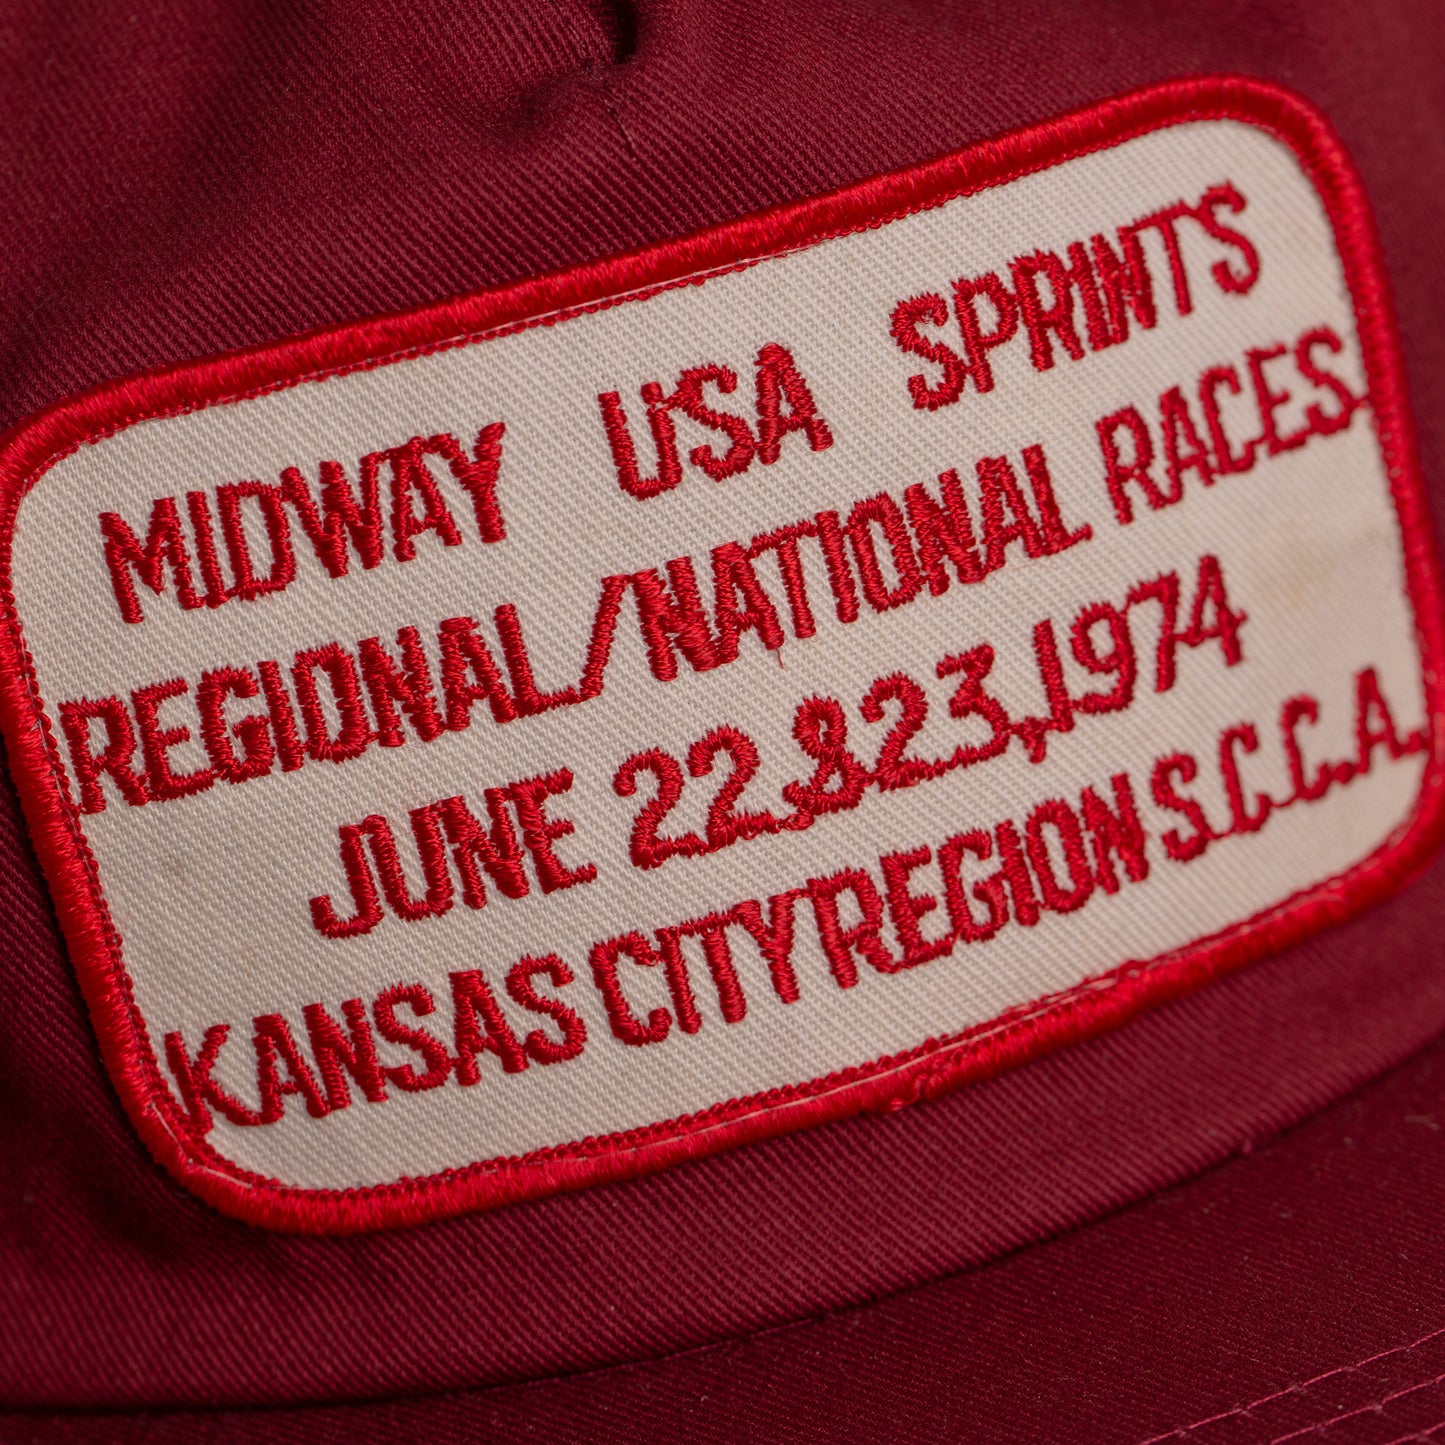 Midway USA Sprints Races Kansas City